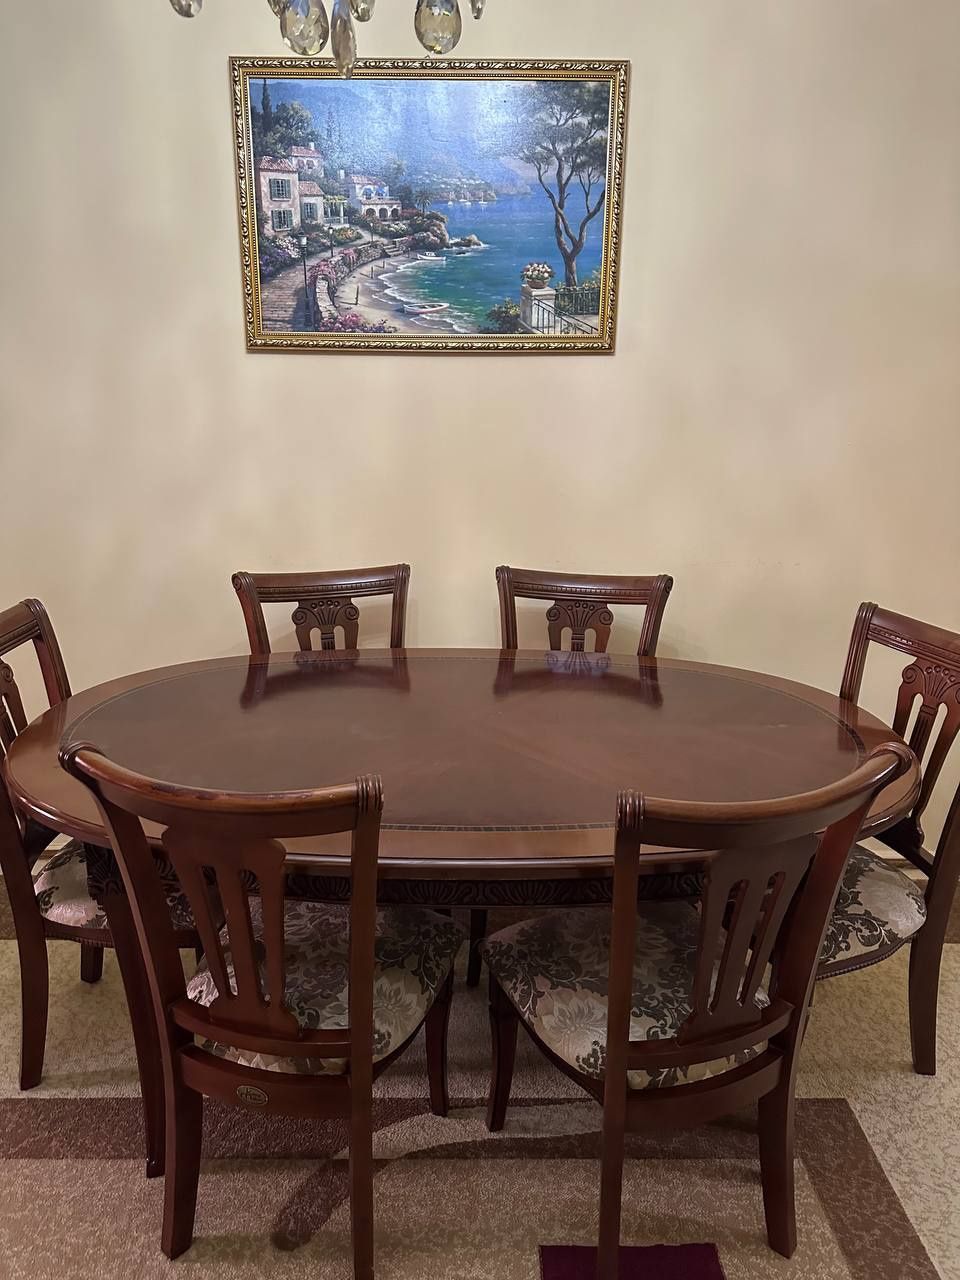 Продается мебел стол, стул из фирми Кенг Макон